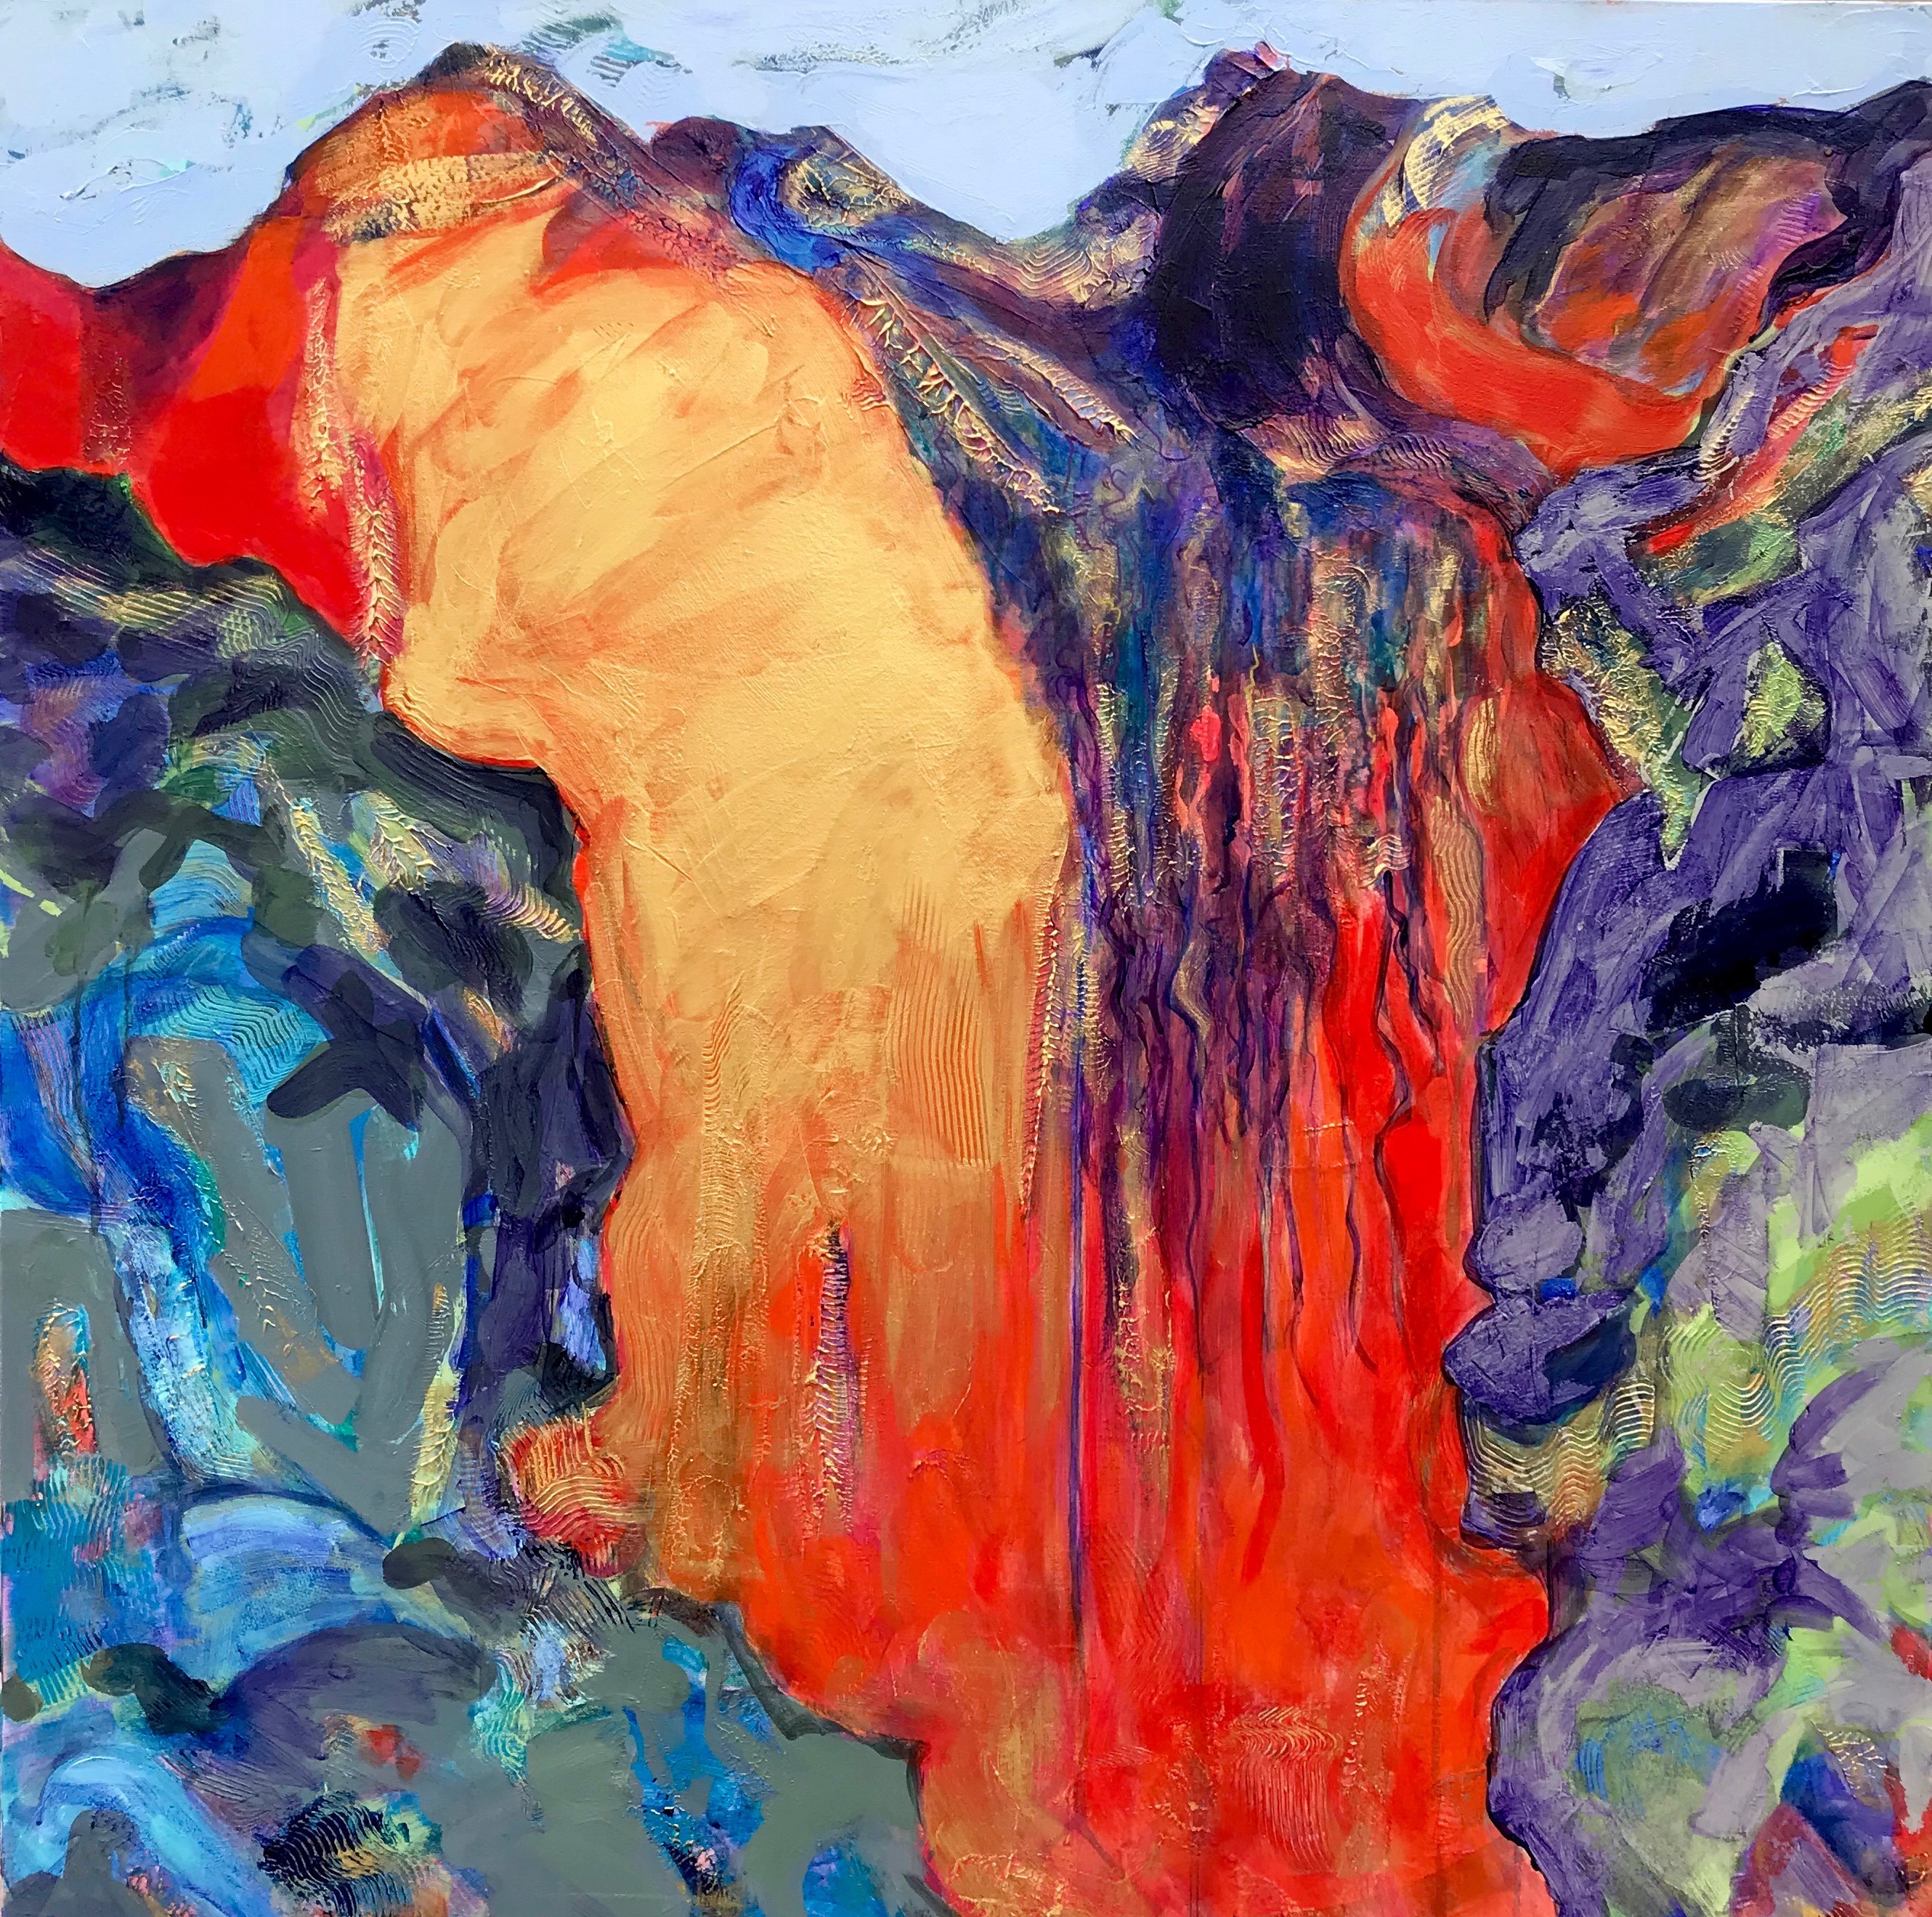 Red Crevasse, original acrylic painting by Christine Reimer, 36 x 36